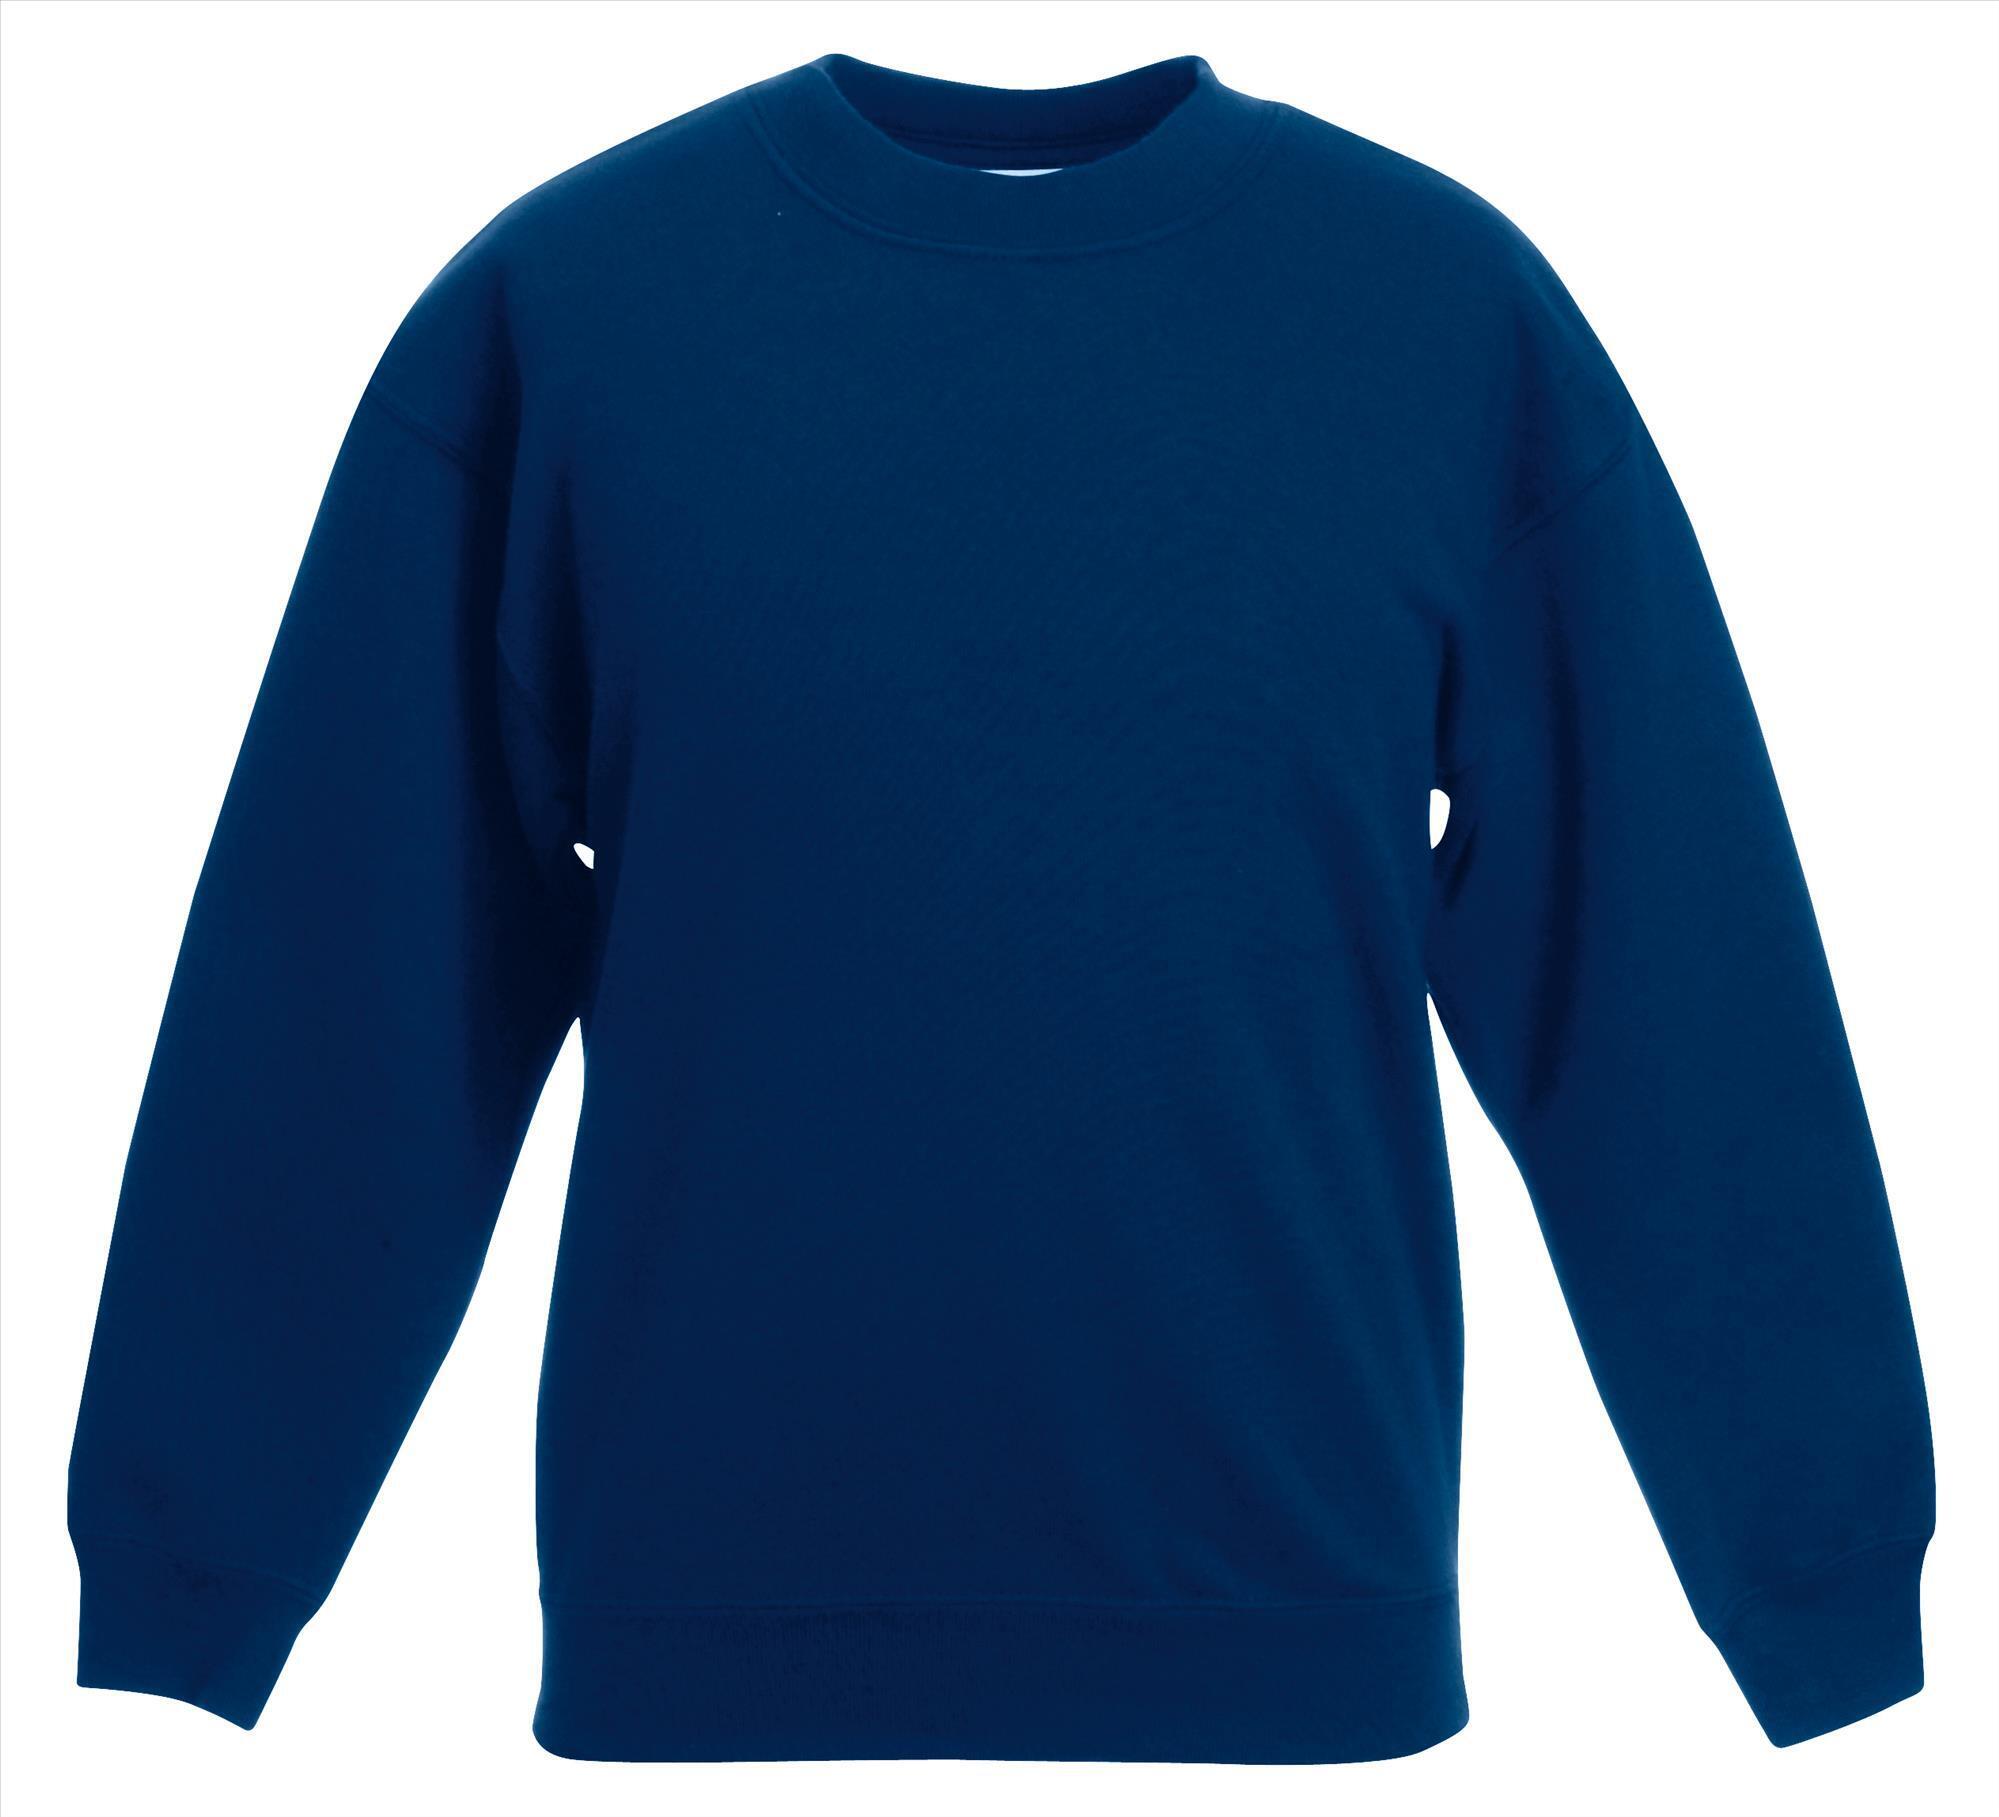 Kinder trui sweater Marine blauw